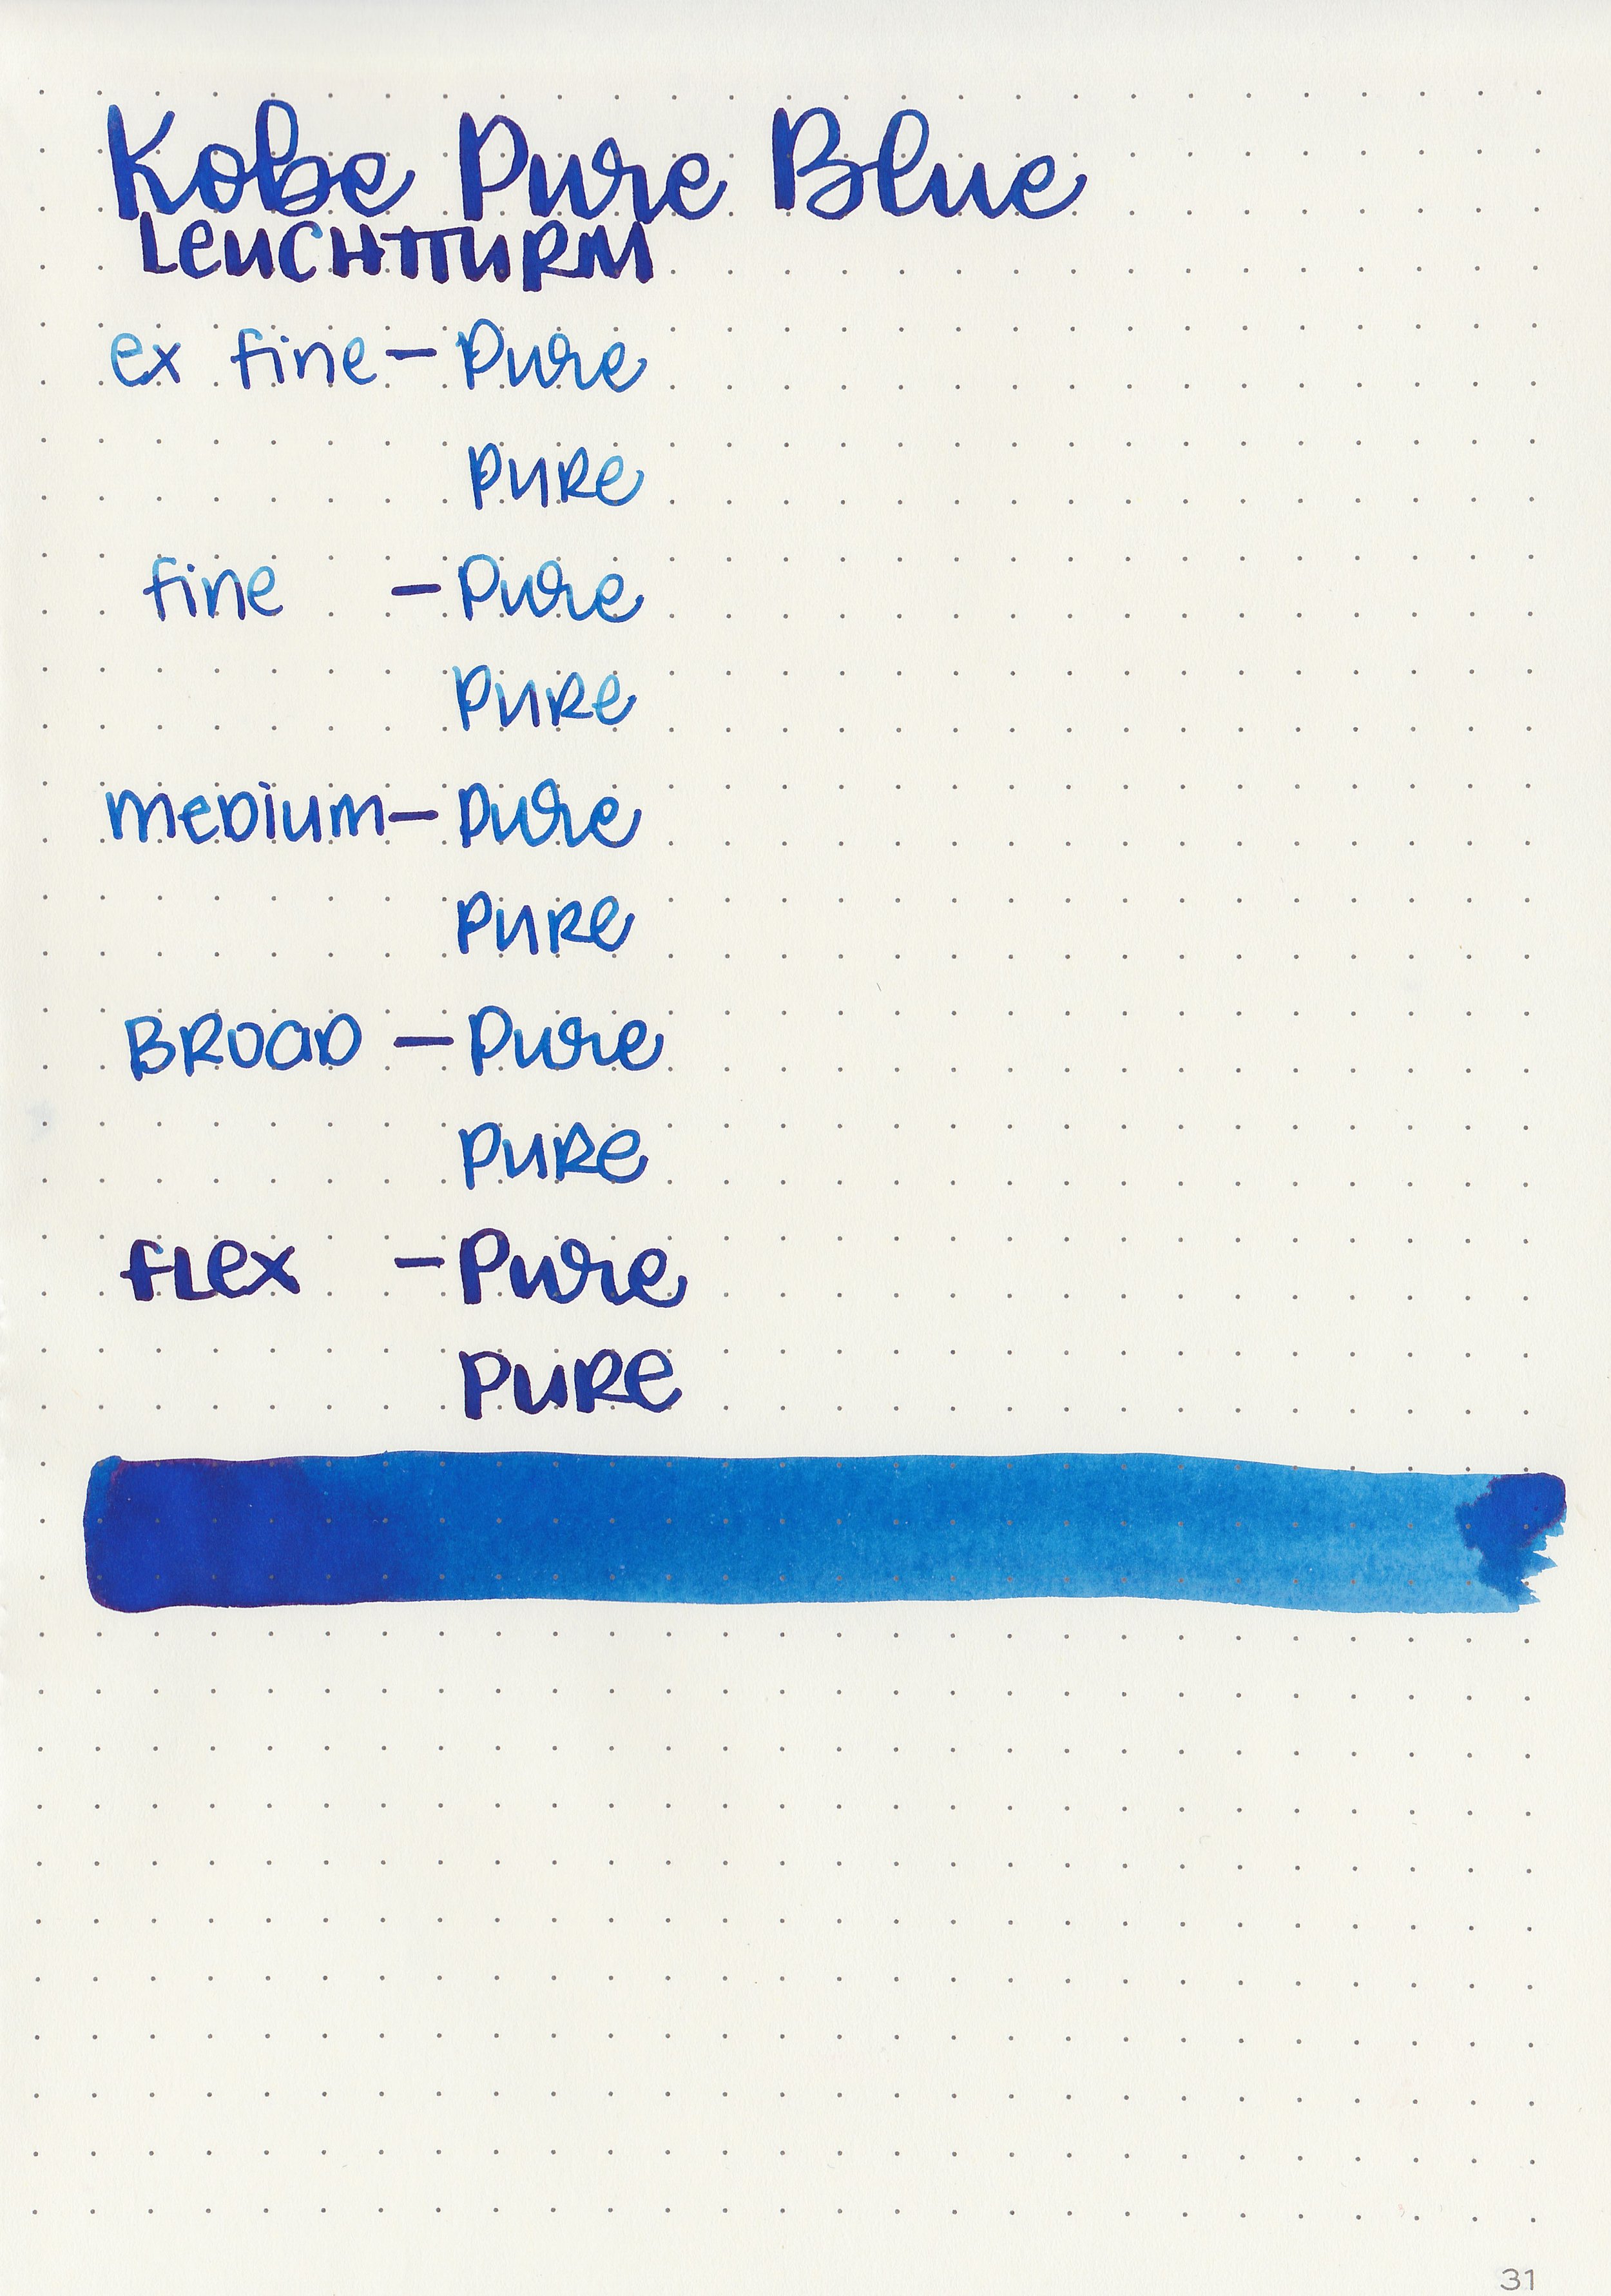 nk-pure-blue-9.jpg